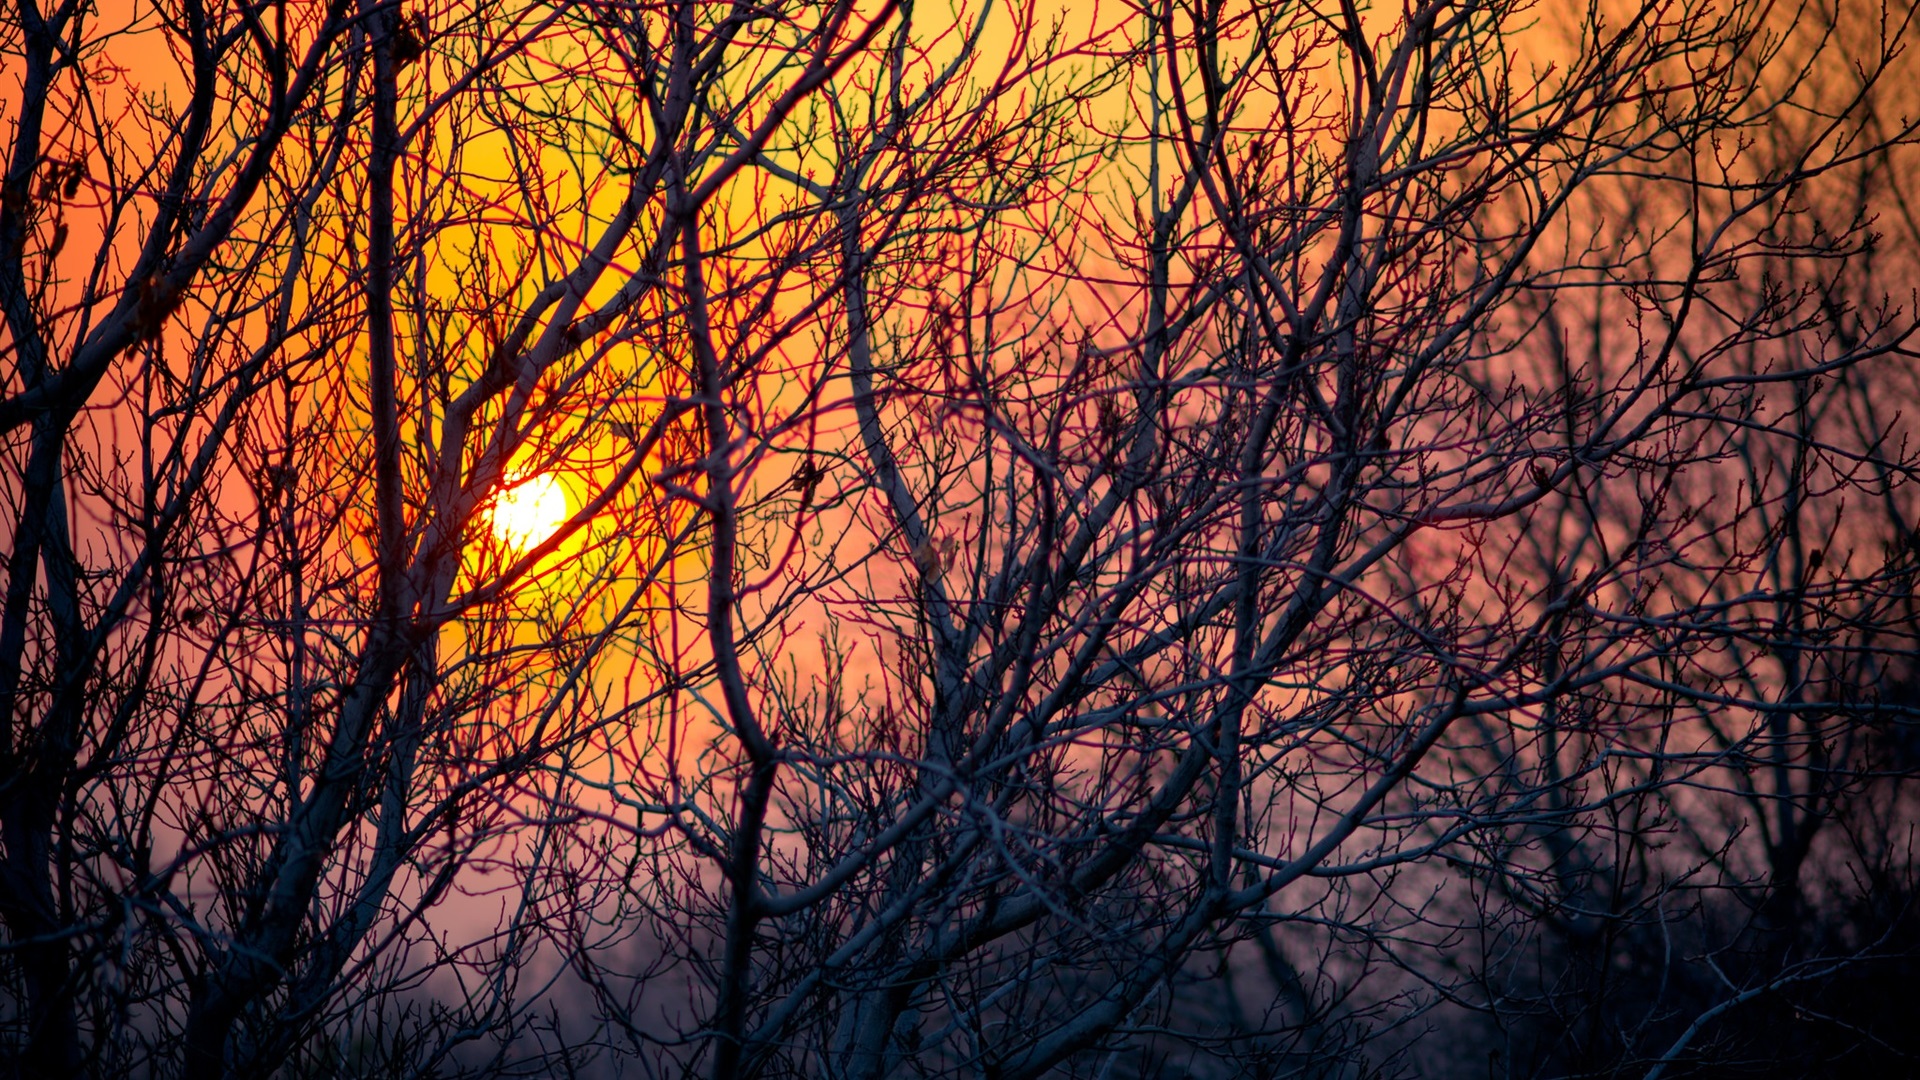 General 1920x1080 landscape nature sunlight sunset evening branch trees plants twigs